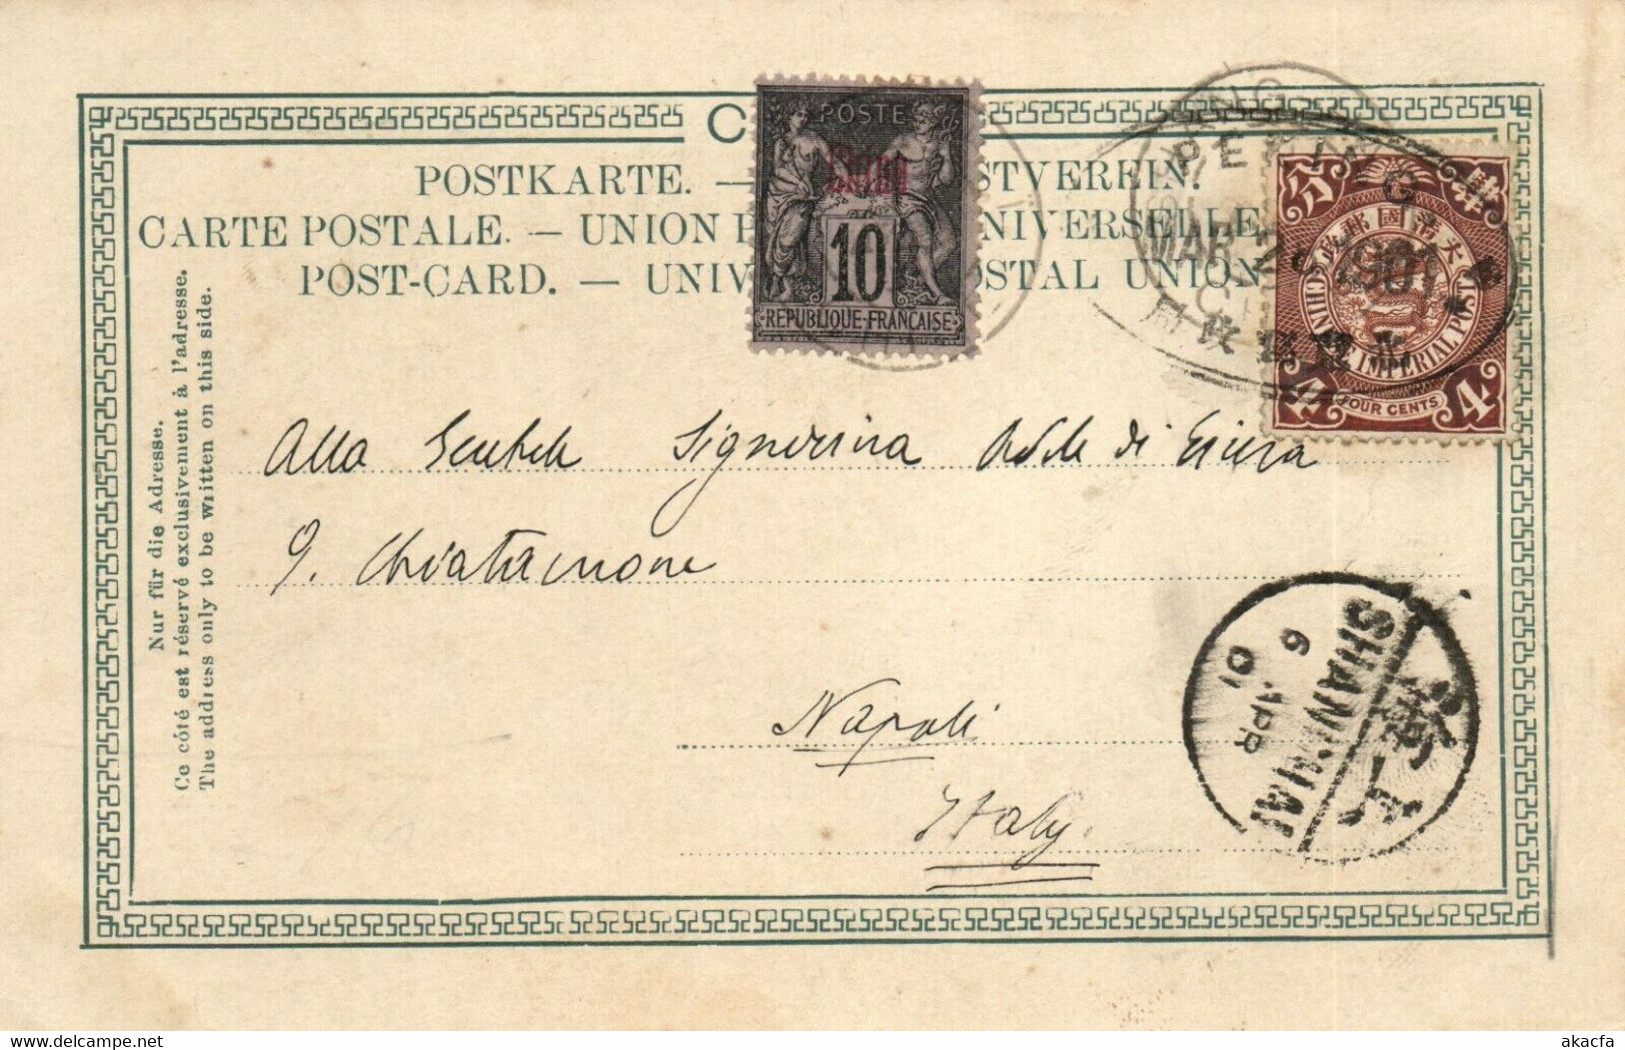 CHINA PEKING 1901 DRAGON Cover PC French P.O. To Napoli Italy (c033) - Briefe U. Dokumente